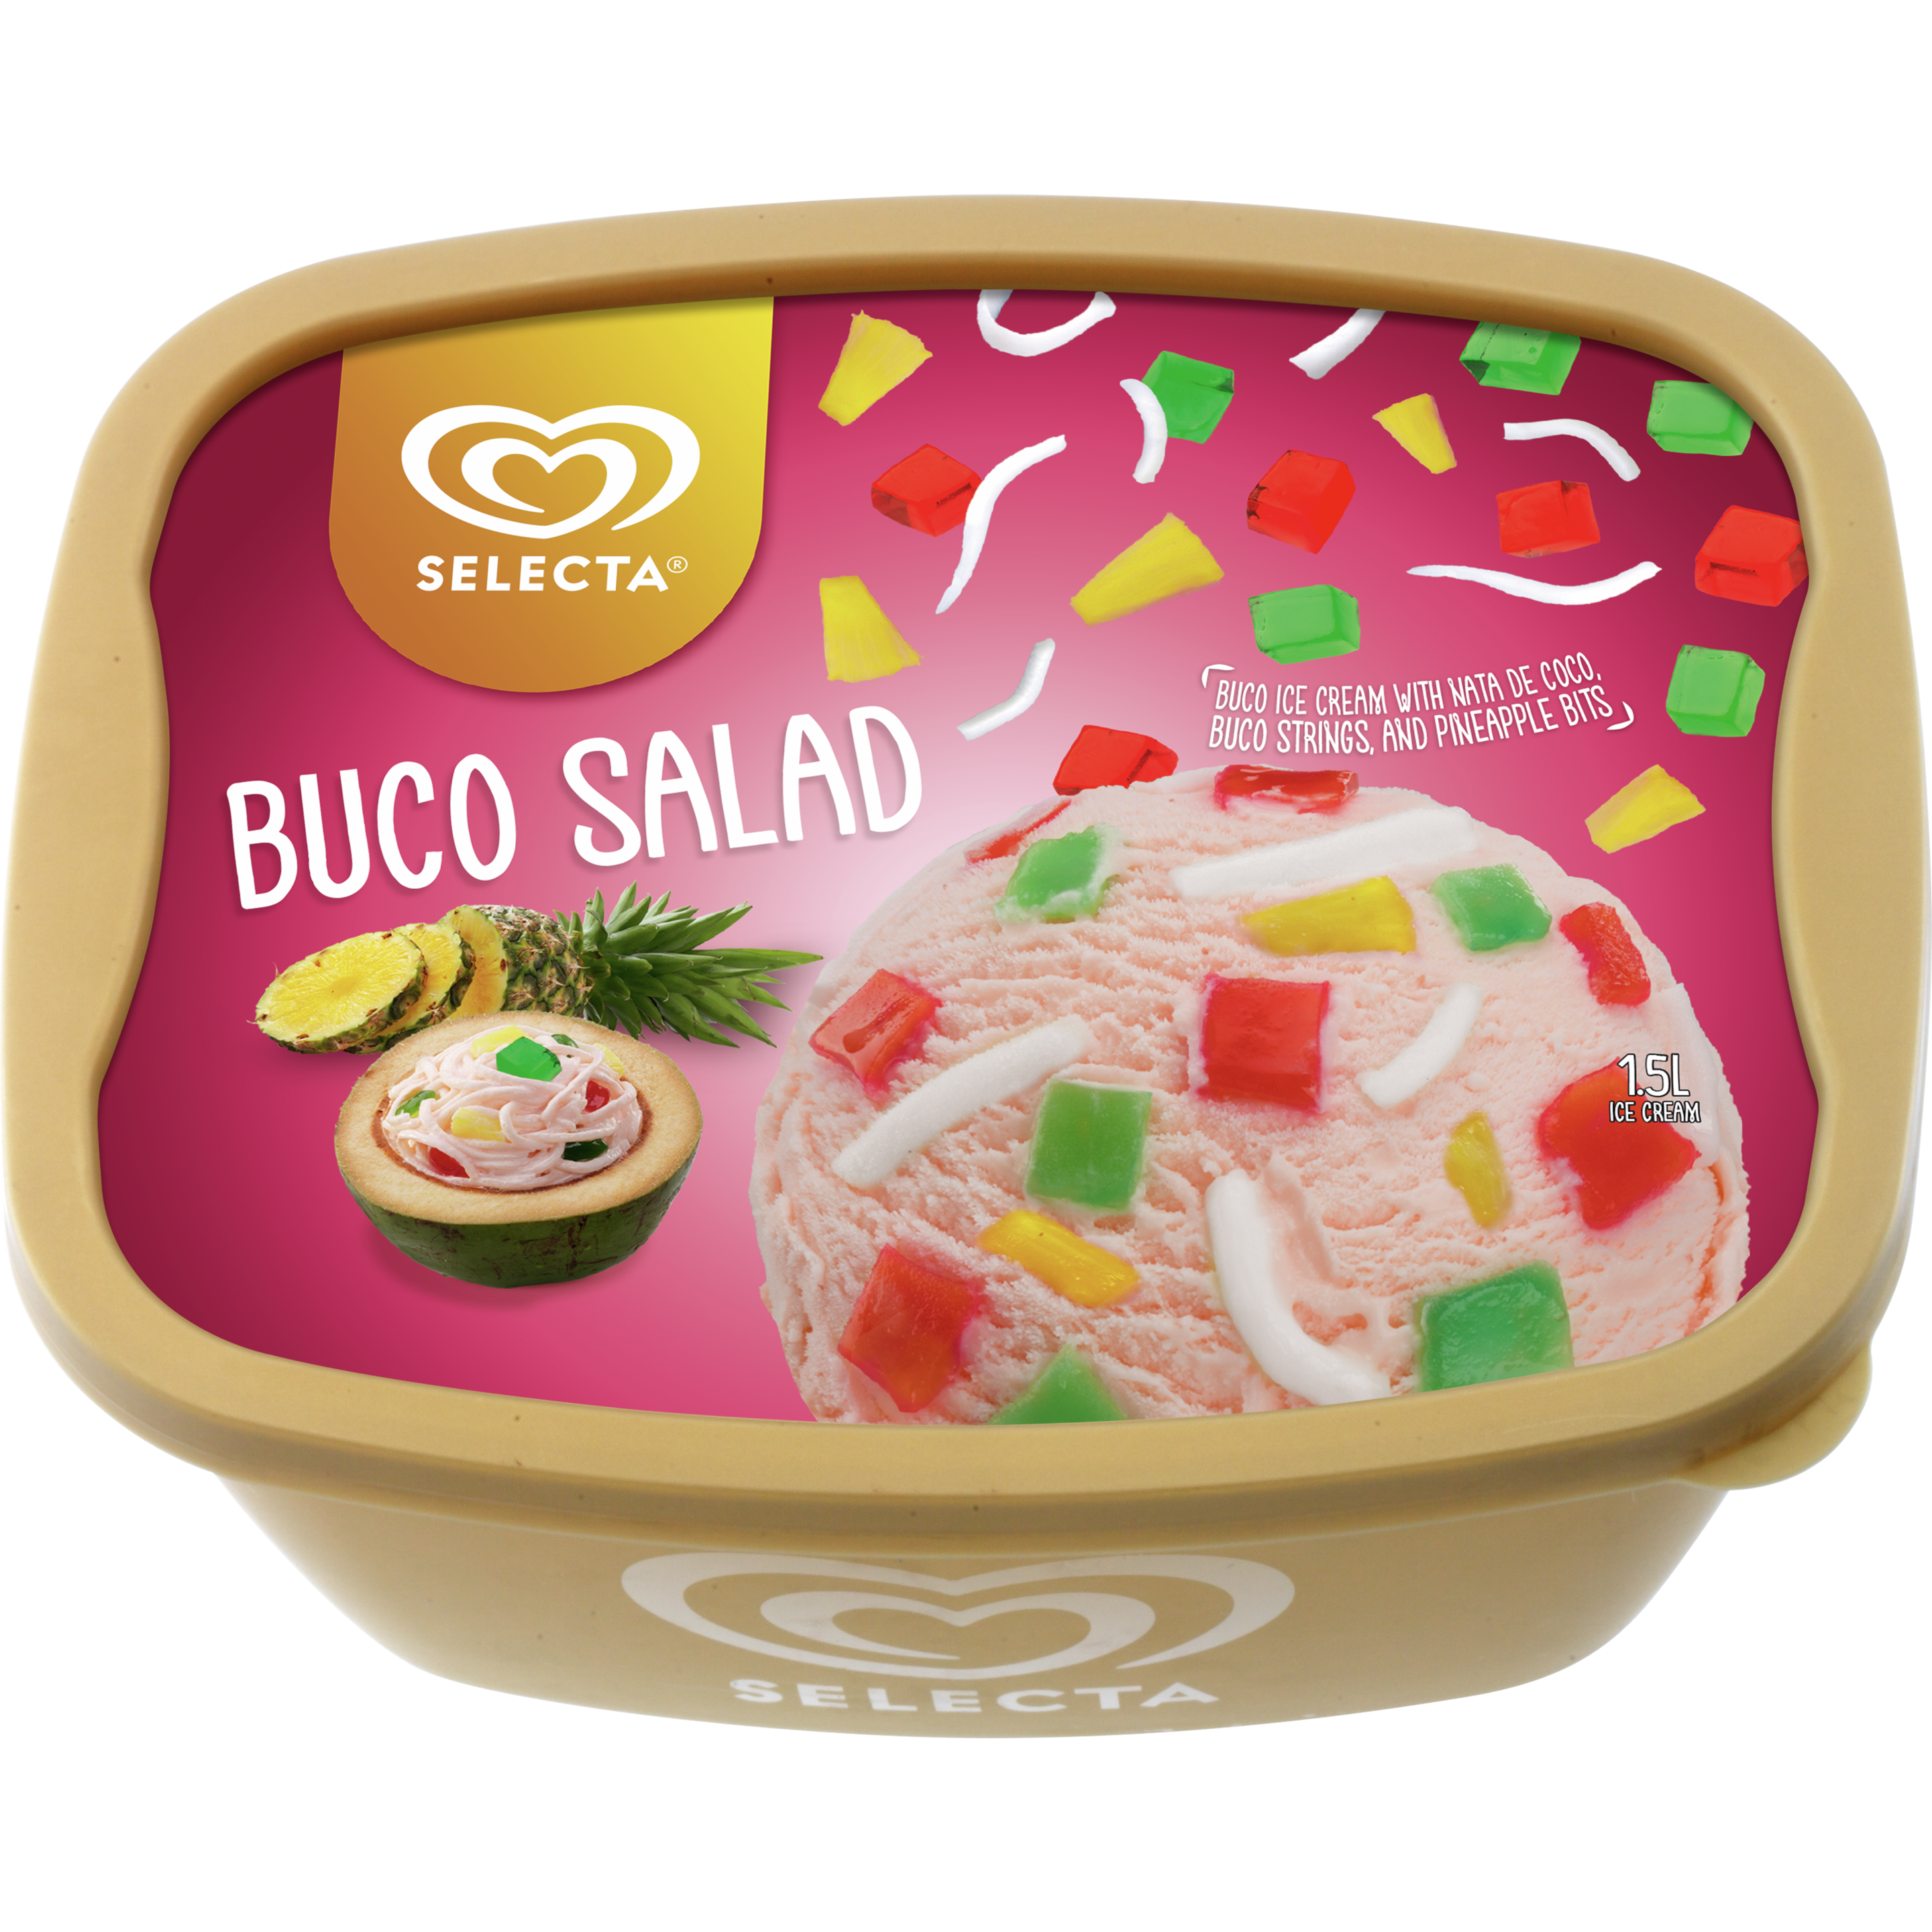 Selecta Supreme Buco Salad Ice Cream